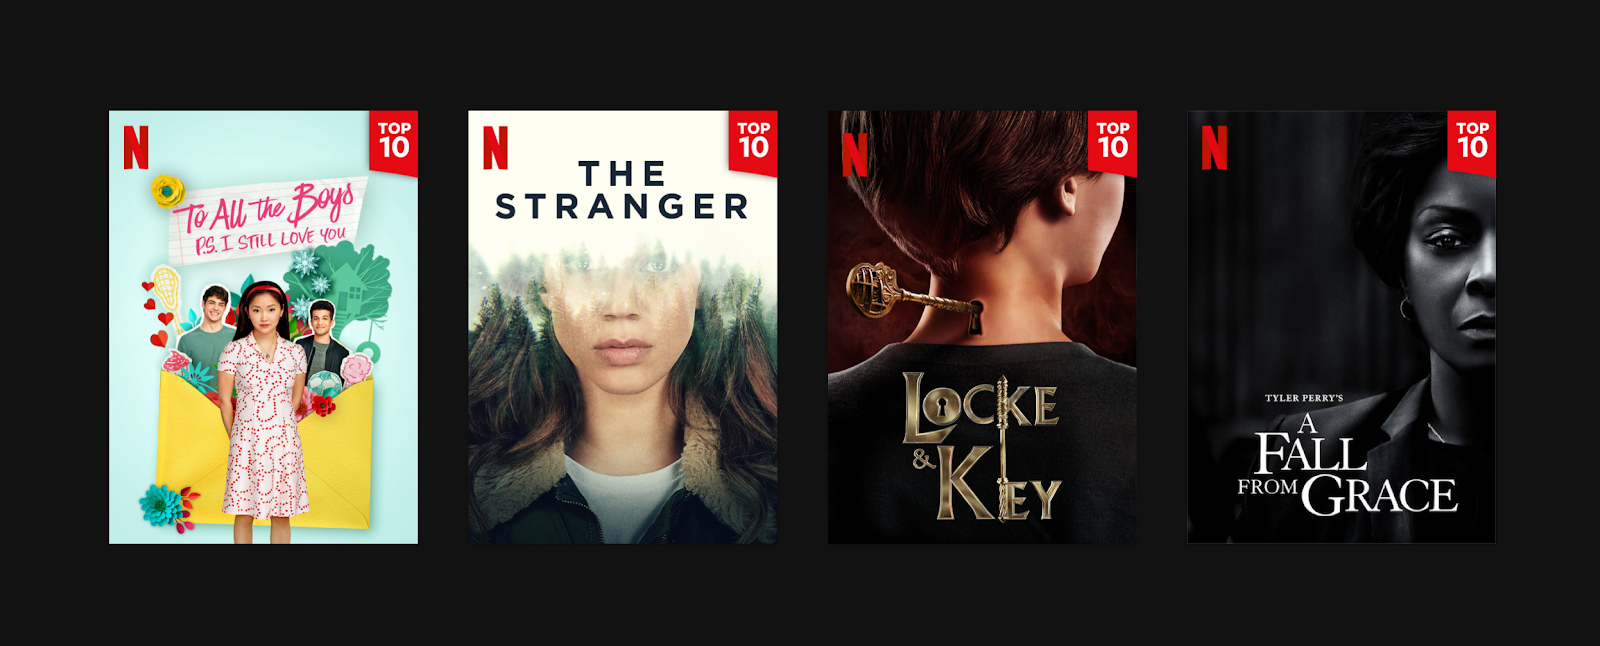 Top 10 odznaku Netflix